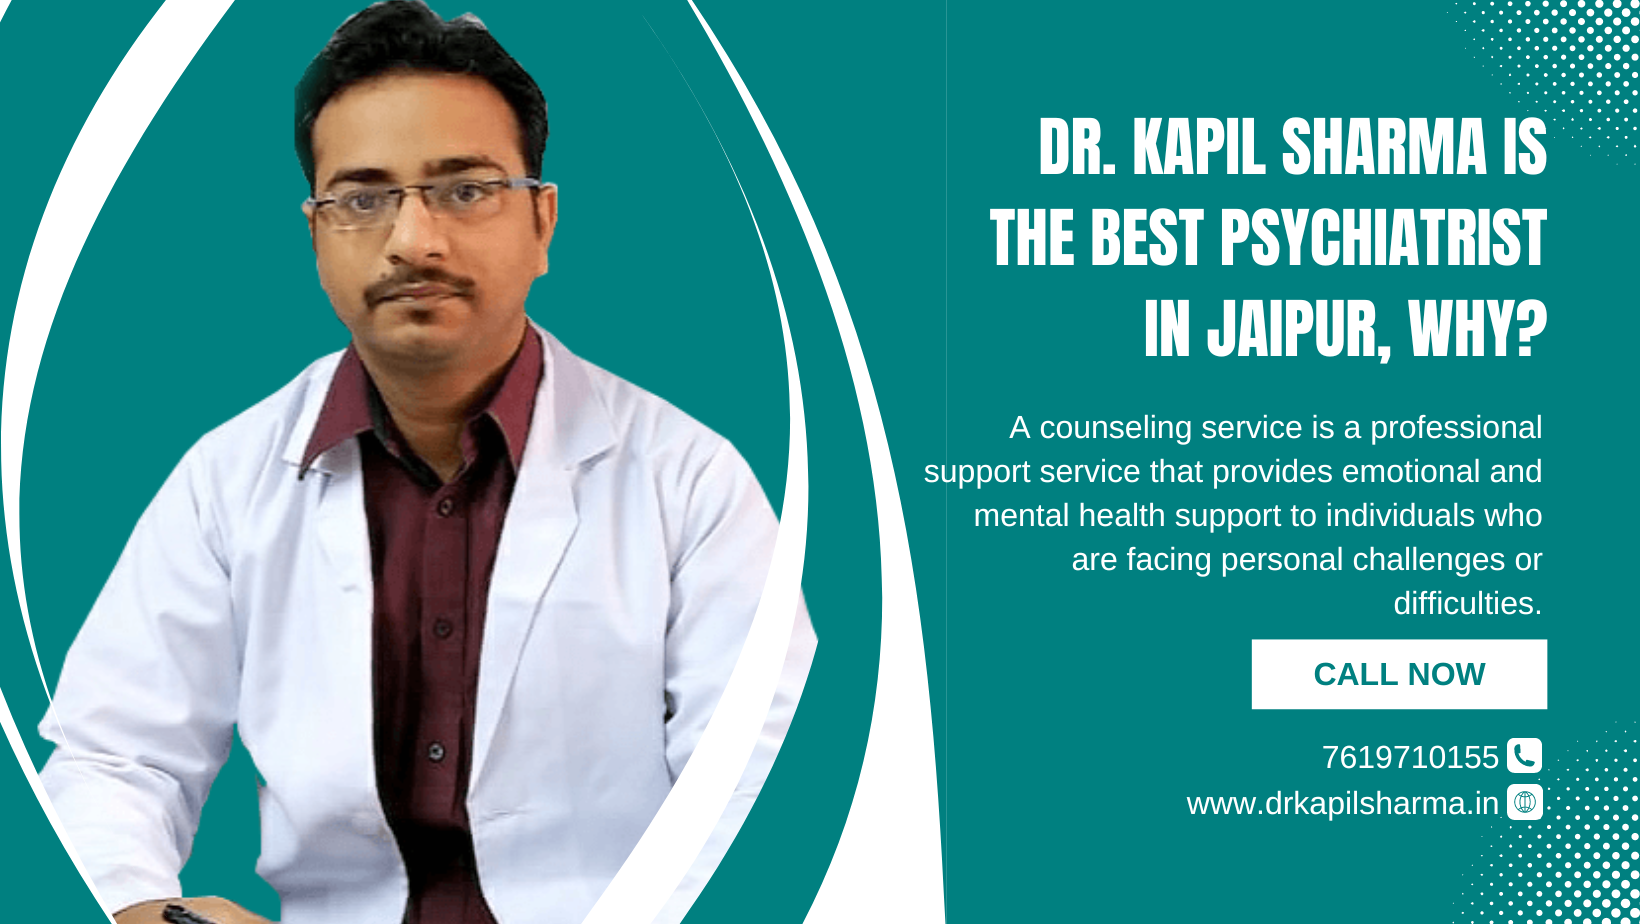 Dr. Kapil Sharma Is The Best Psychiatrist In Jaipur, Why